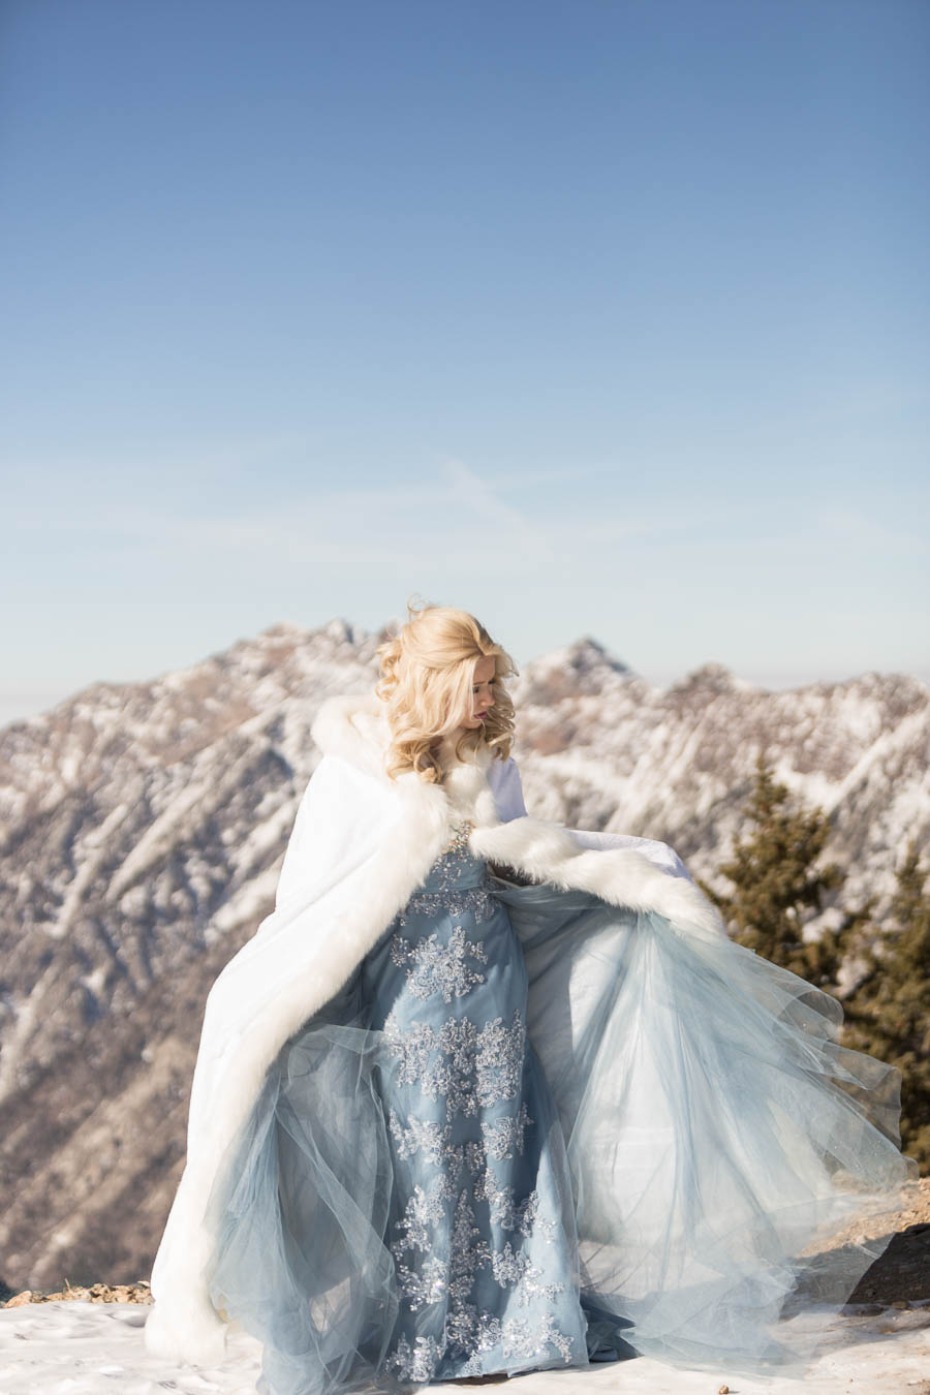 Disneys Frozen inspired wedding style